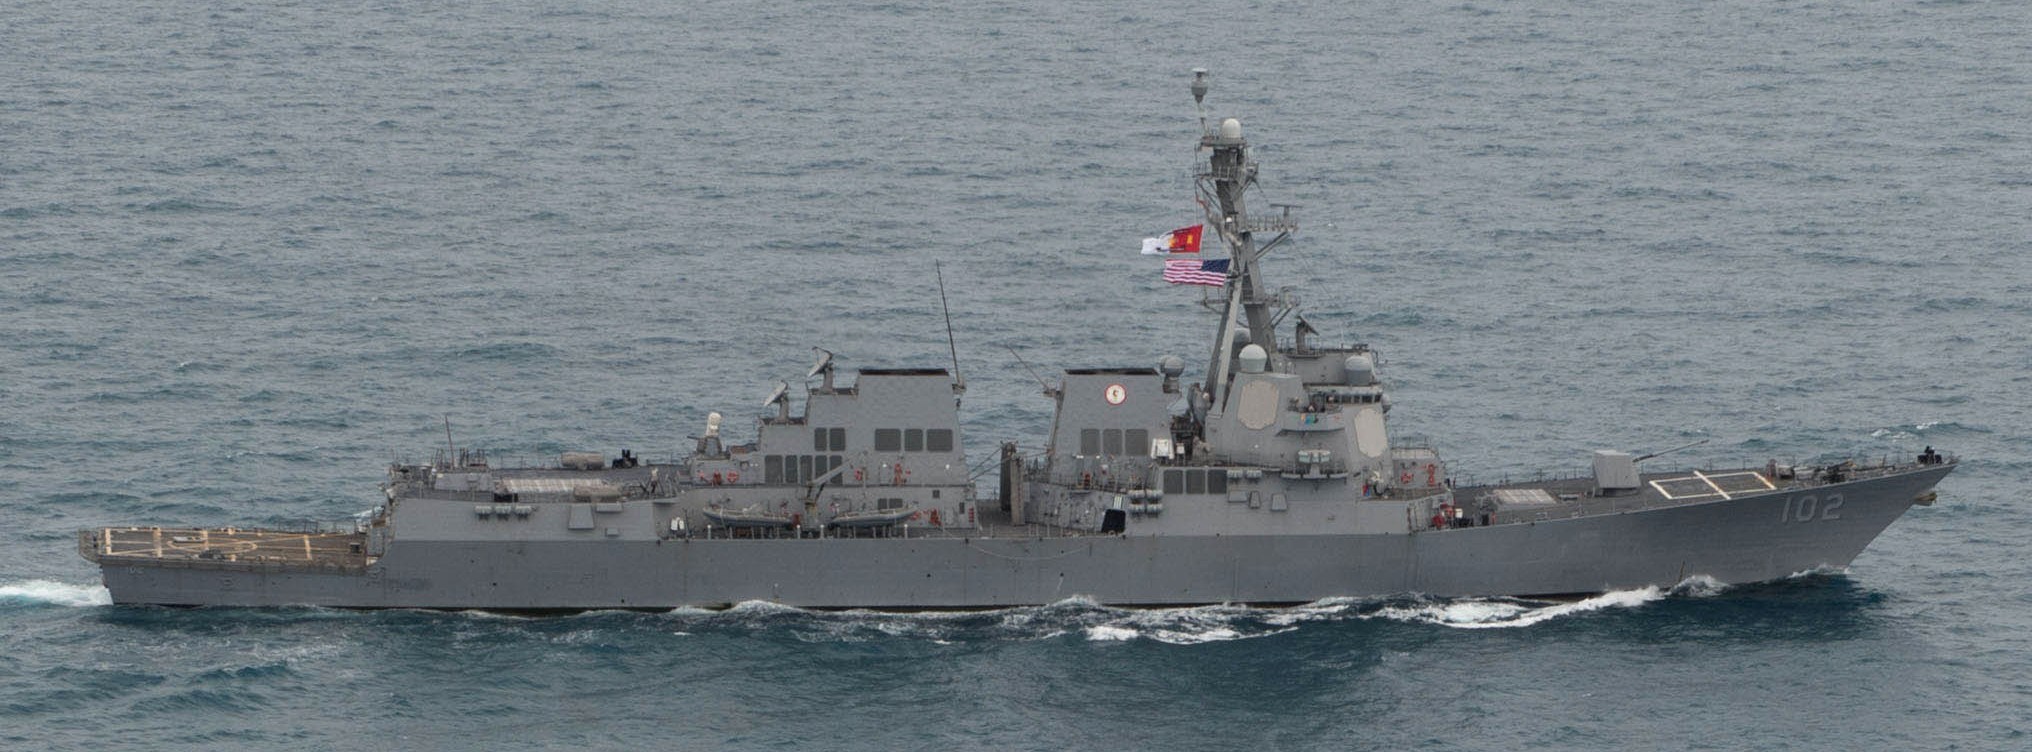 ddg-102 uss sampson arleigh burke class guided missile destroyer aegis us navy 13